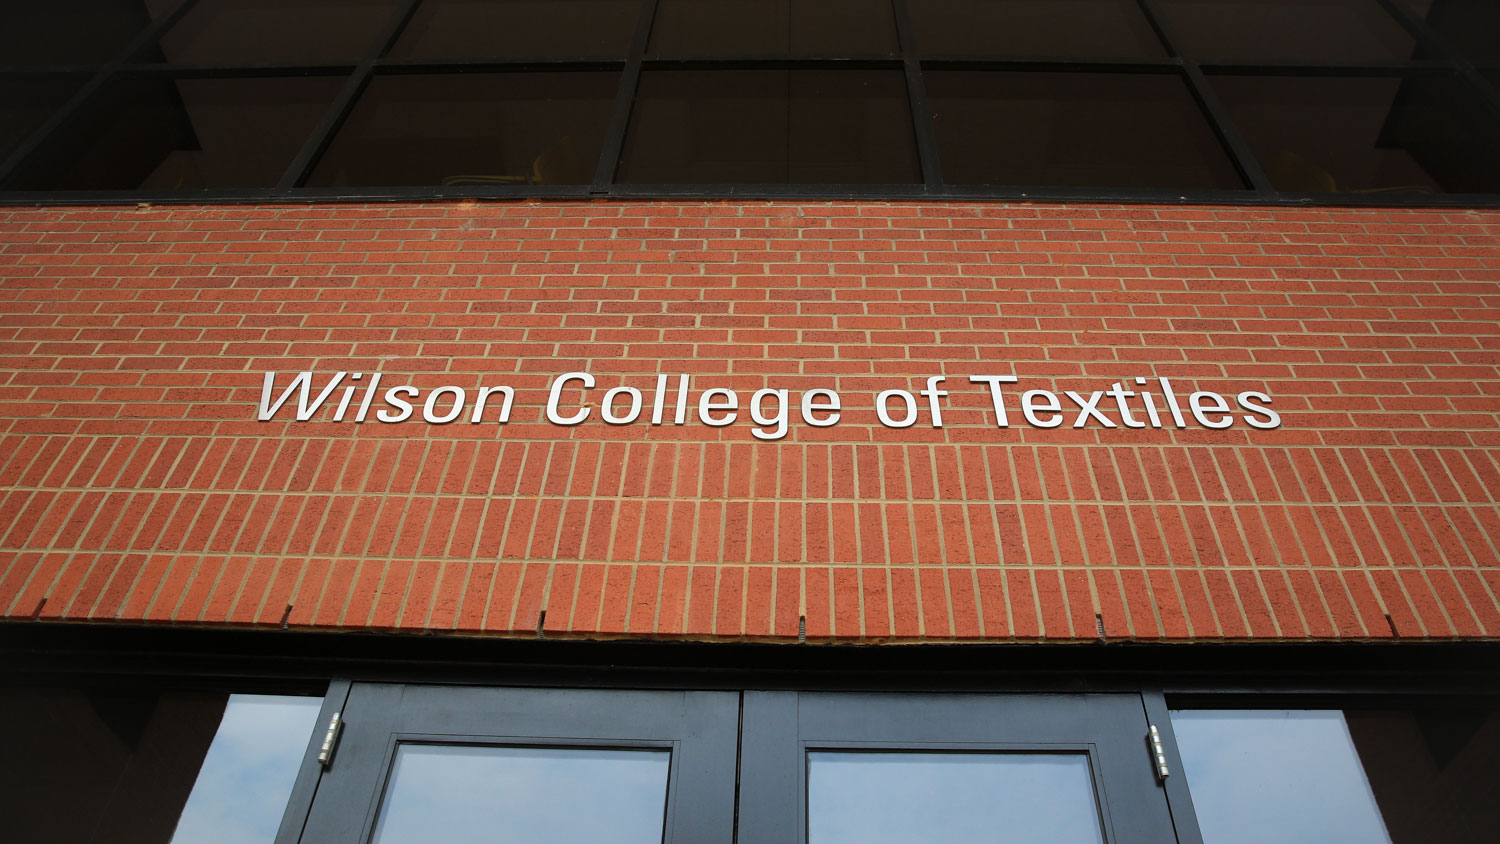 Wilson College of Textiles building